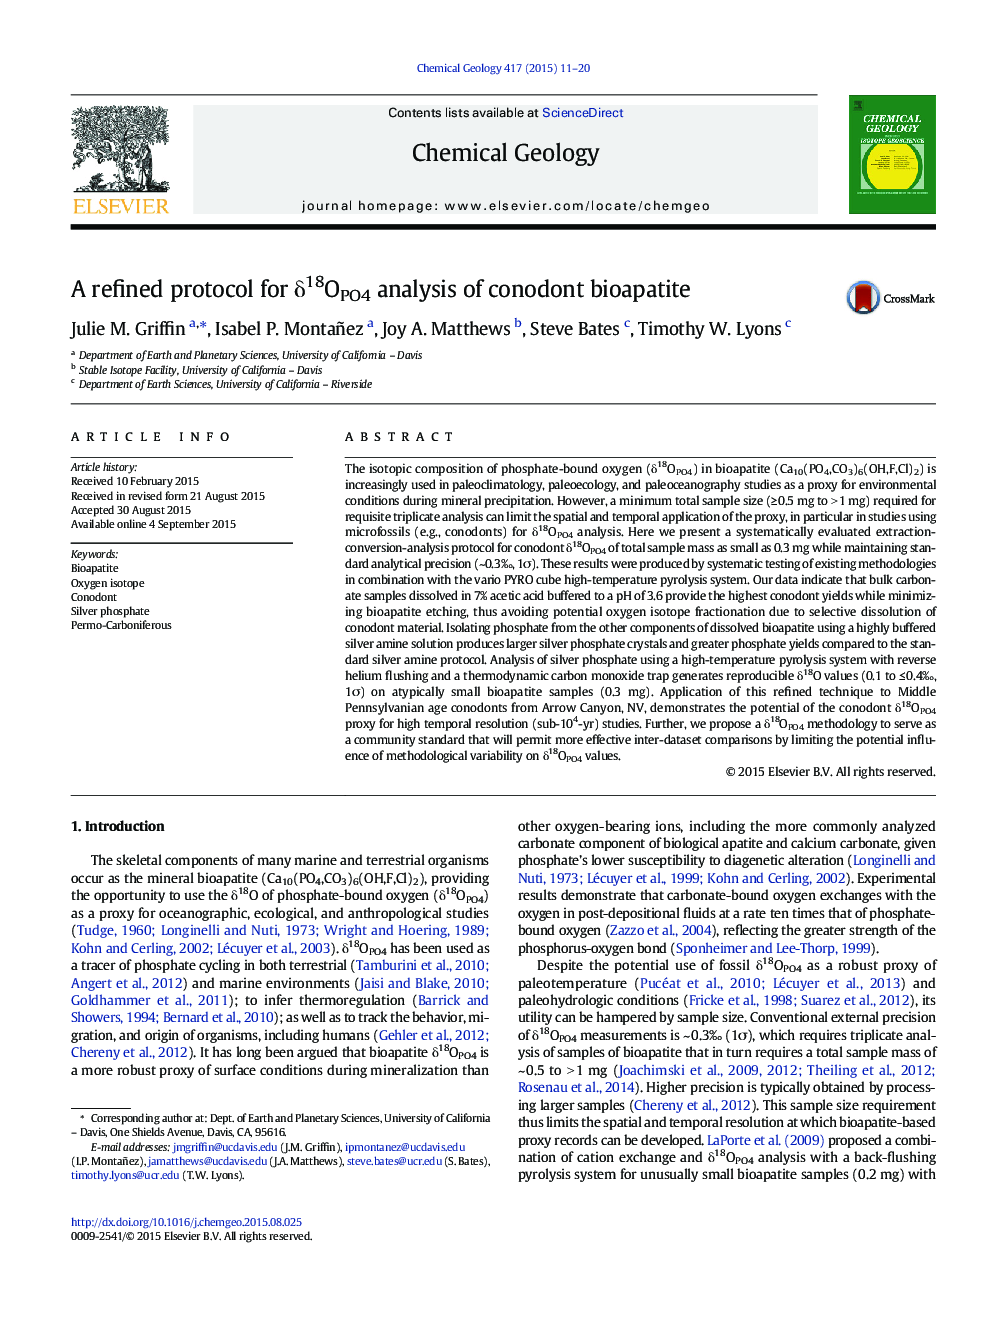 A refined protocol for Î´18OPO4 analysis of conodont bioapatite